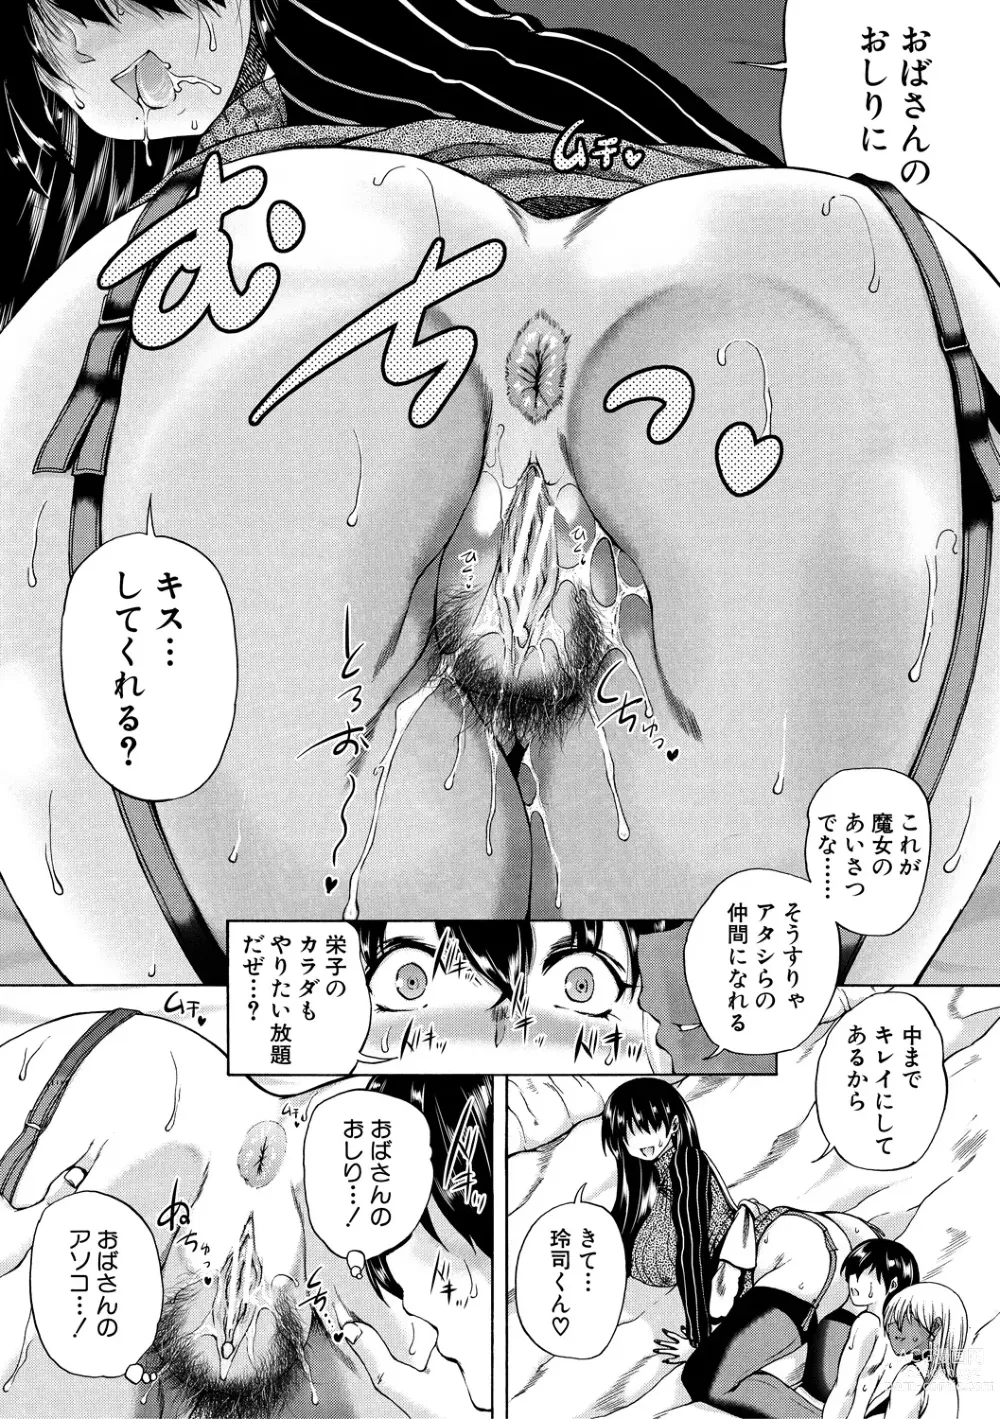 Page 20 of manga Maou Tensei Harem - Devil Reincarnation